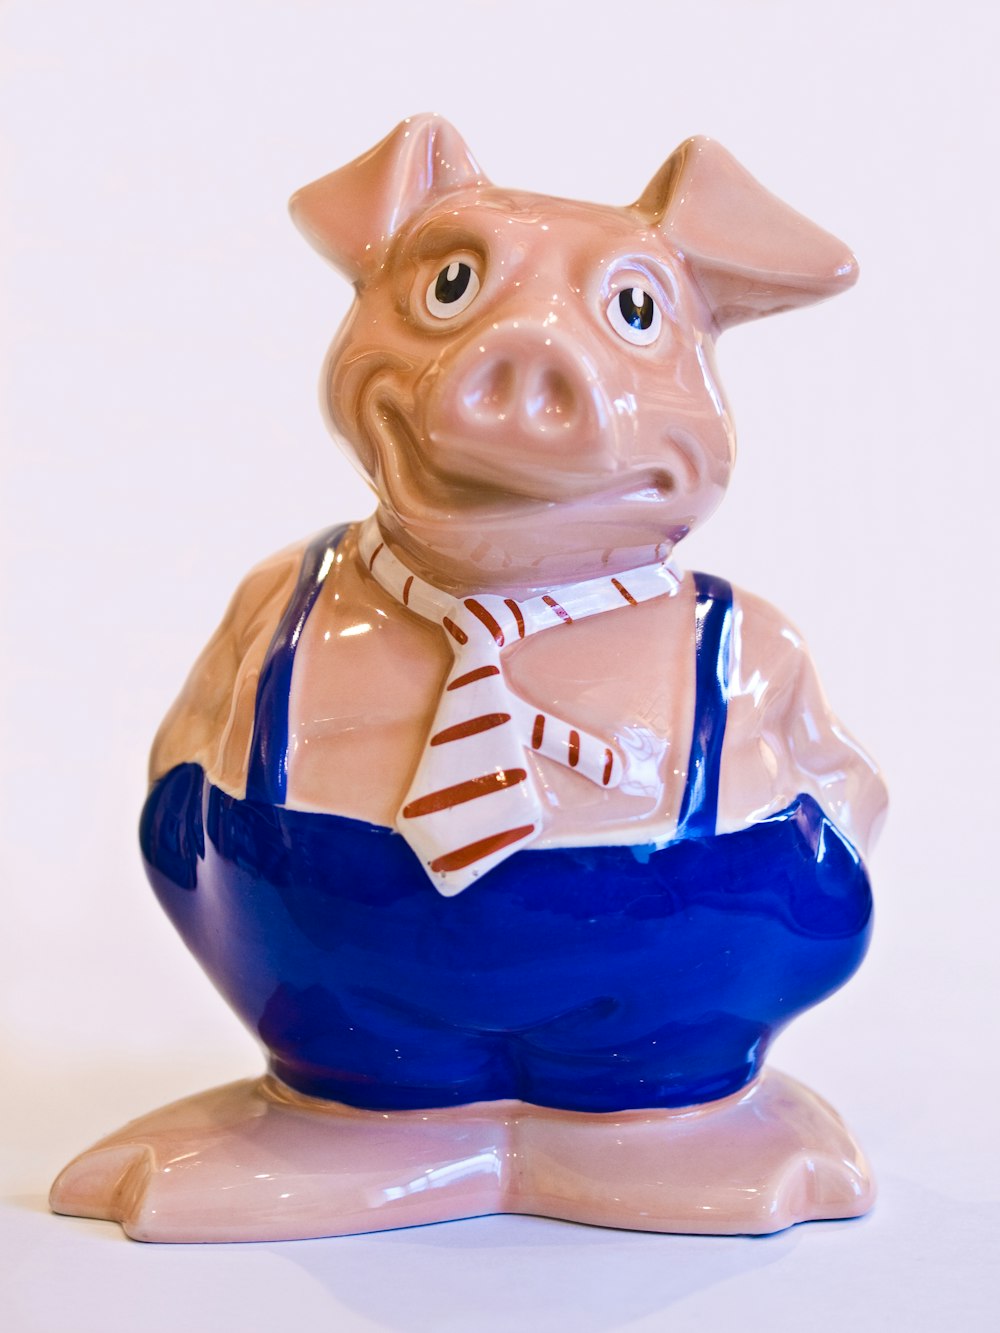 a ceramic pig figurine with a tie around its neck